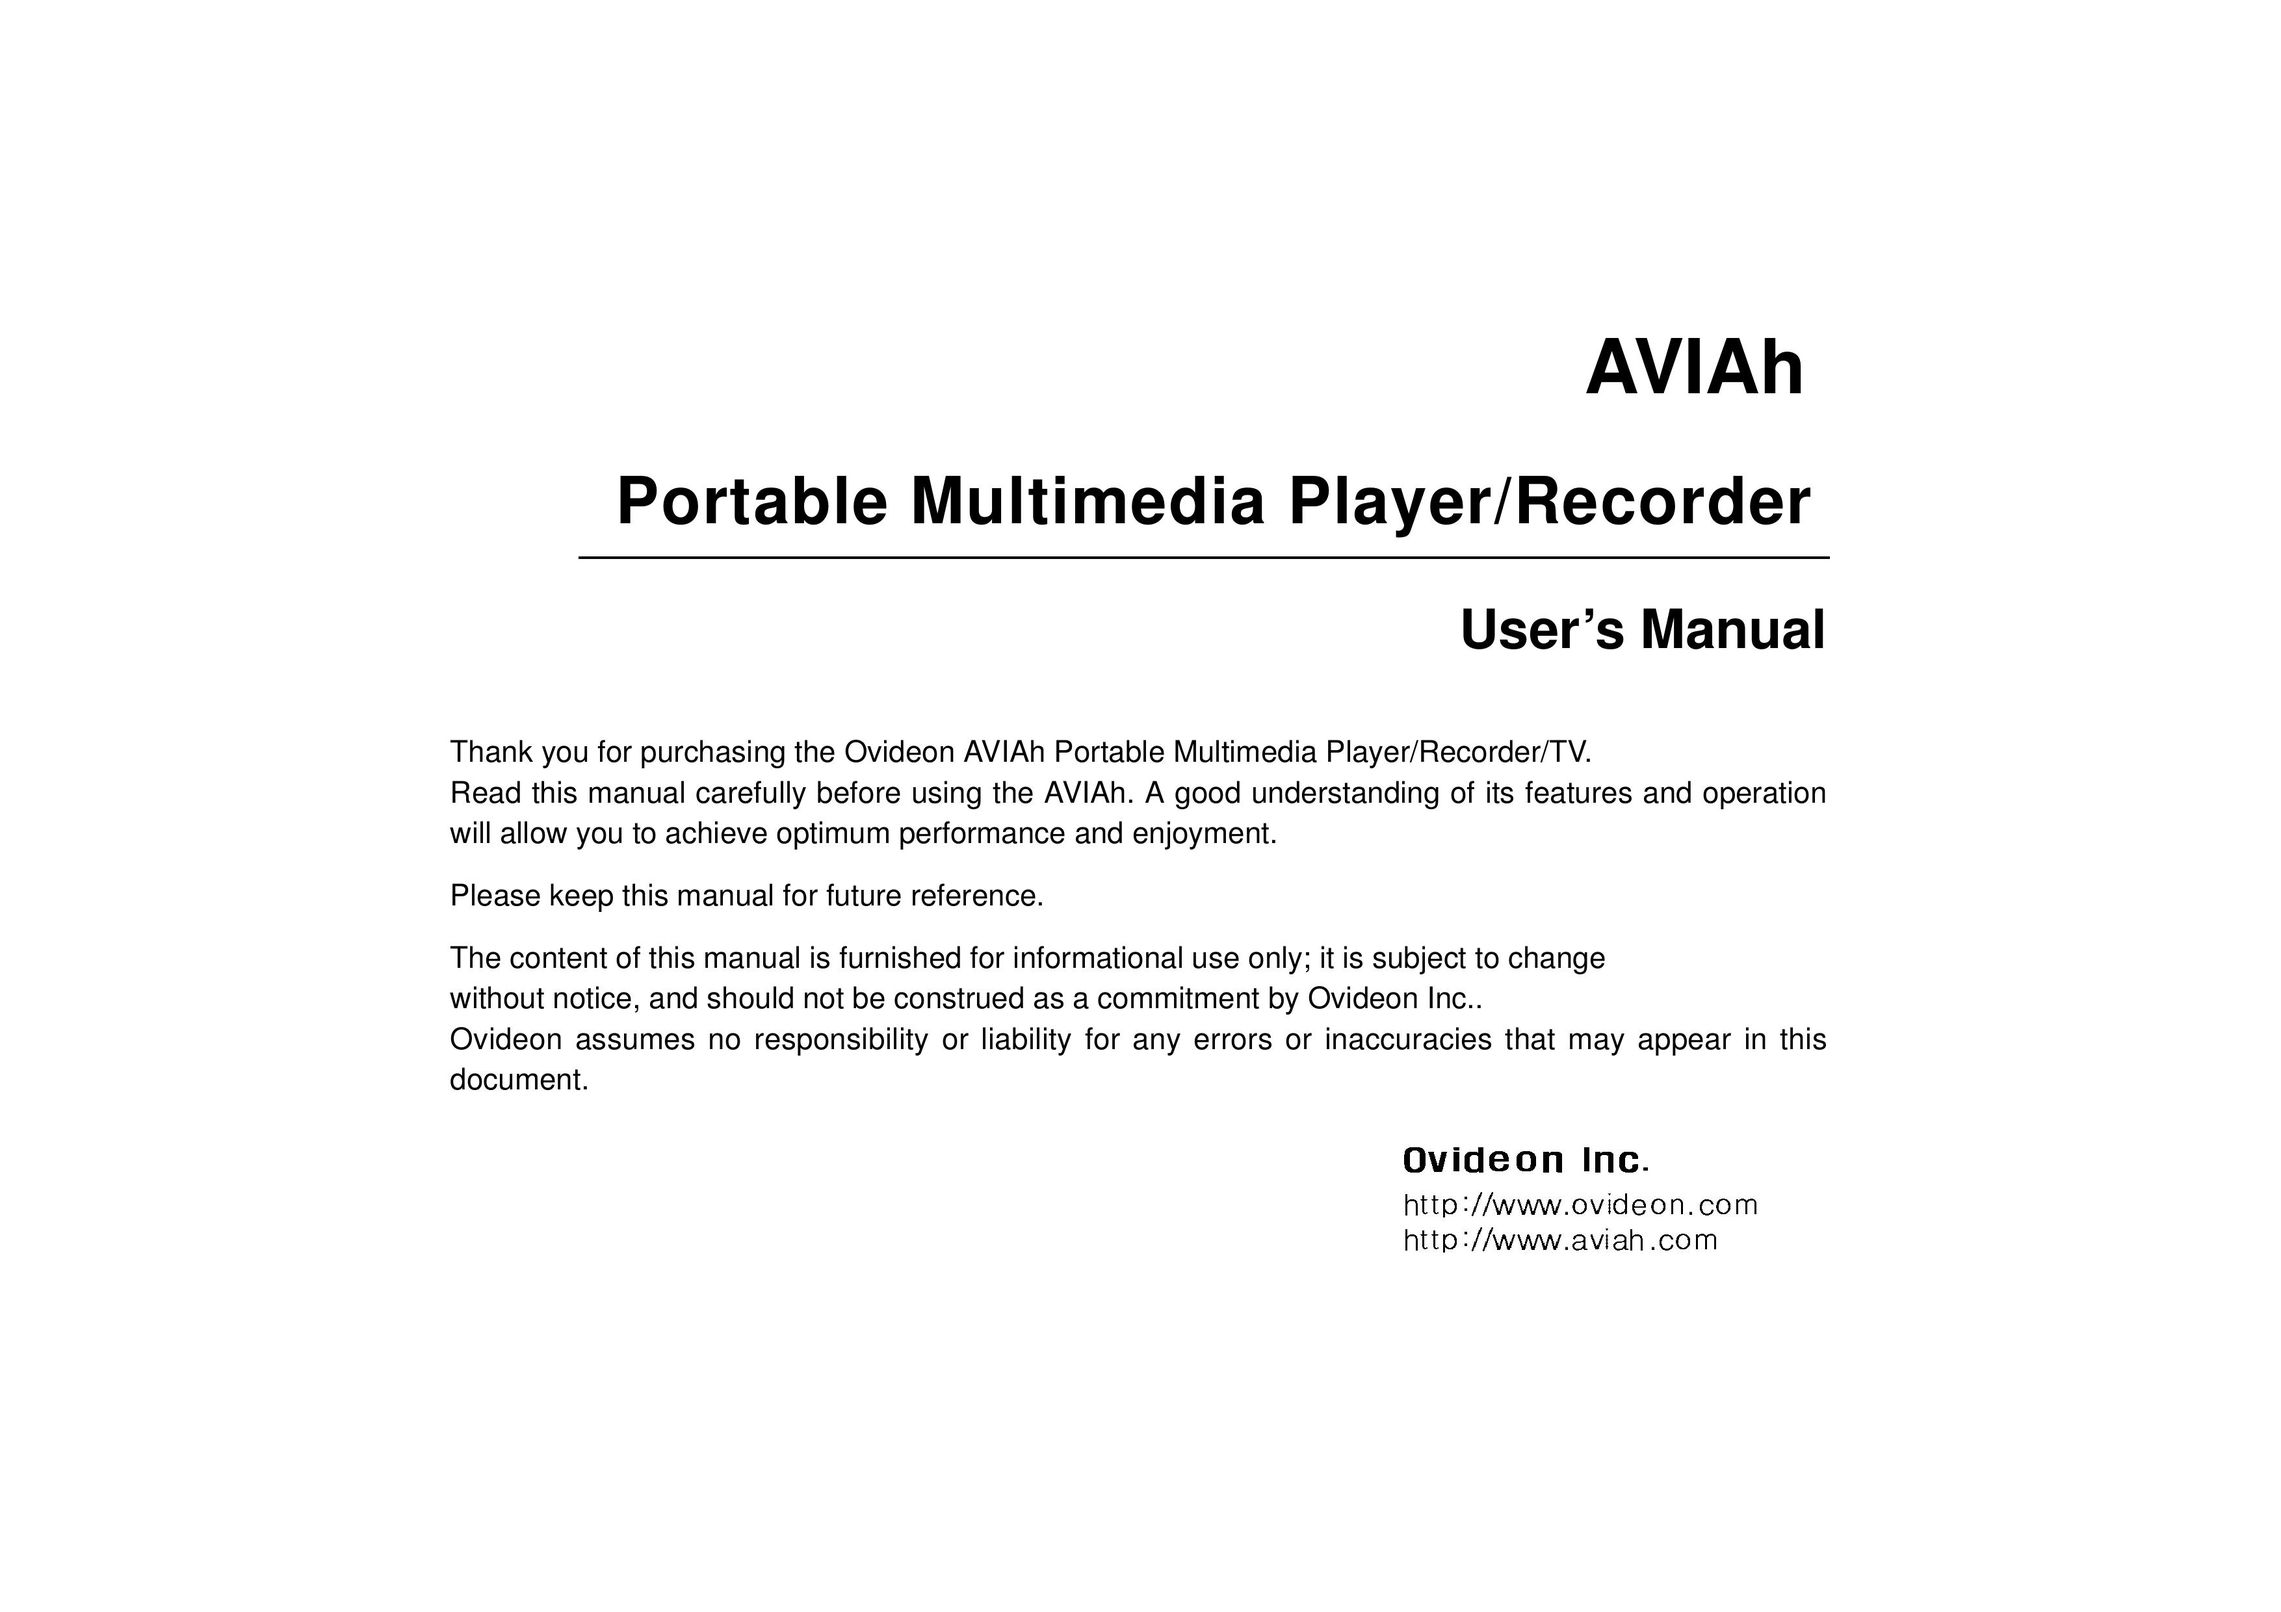 Ovideon AVIAh Portable Multimedia Player User Manual